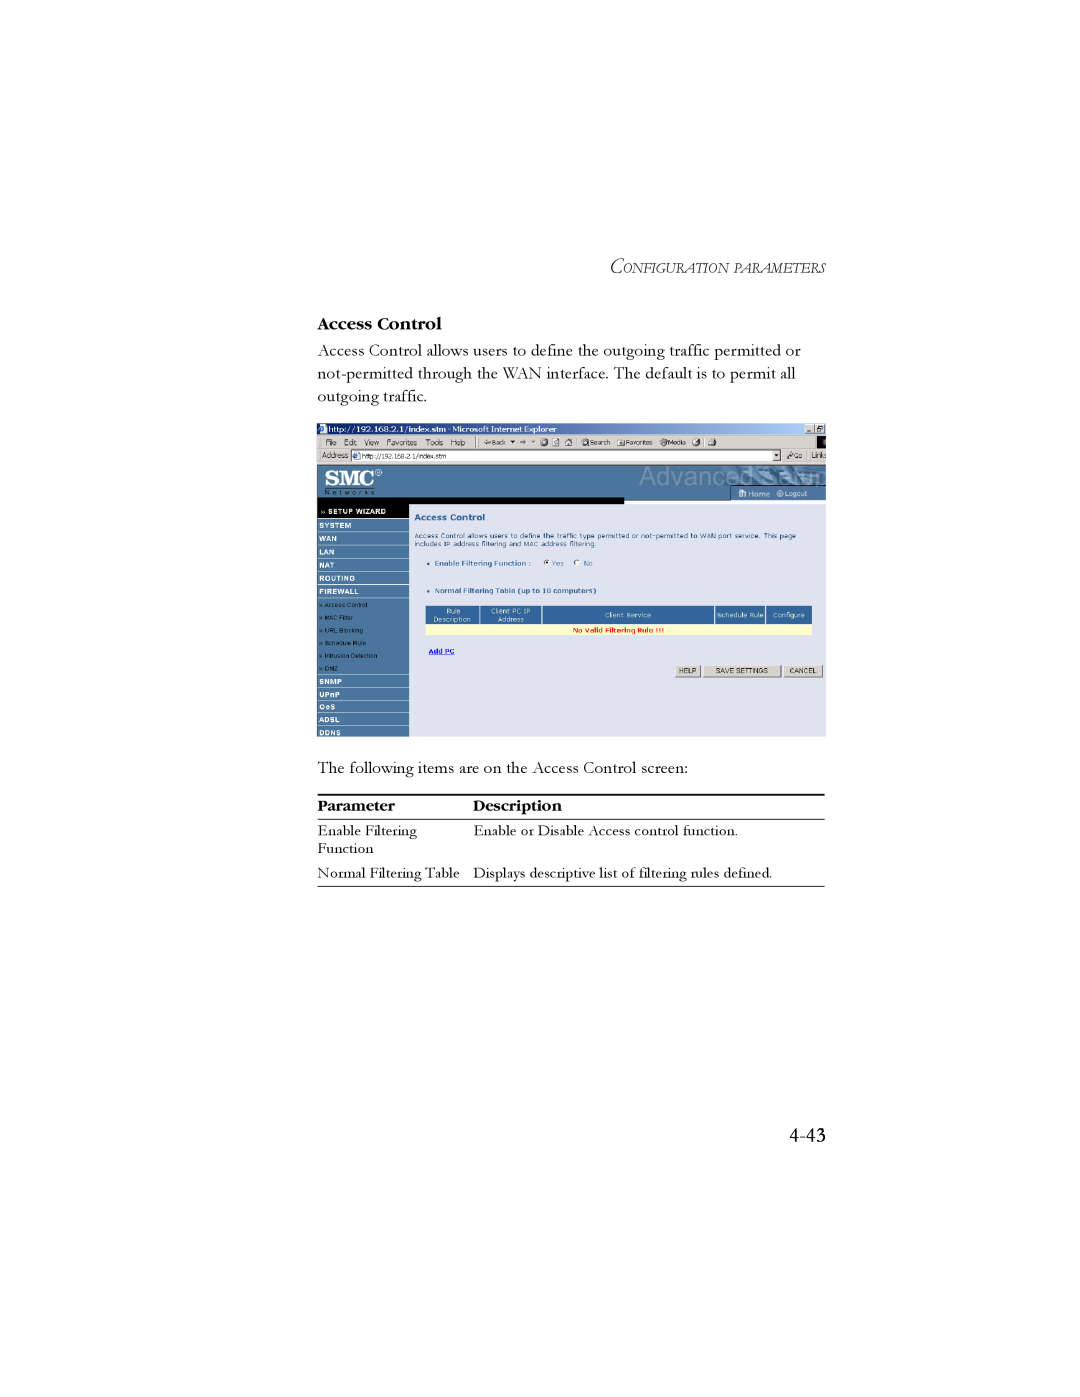 SMC Networks SMC7904BRB2 manual 4-43, Access Control 